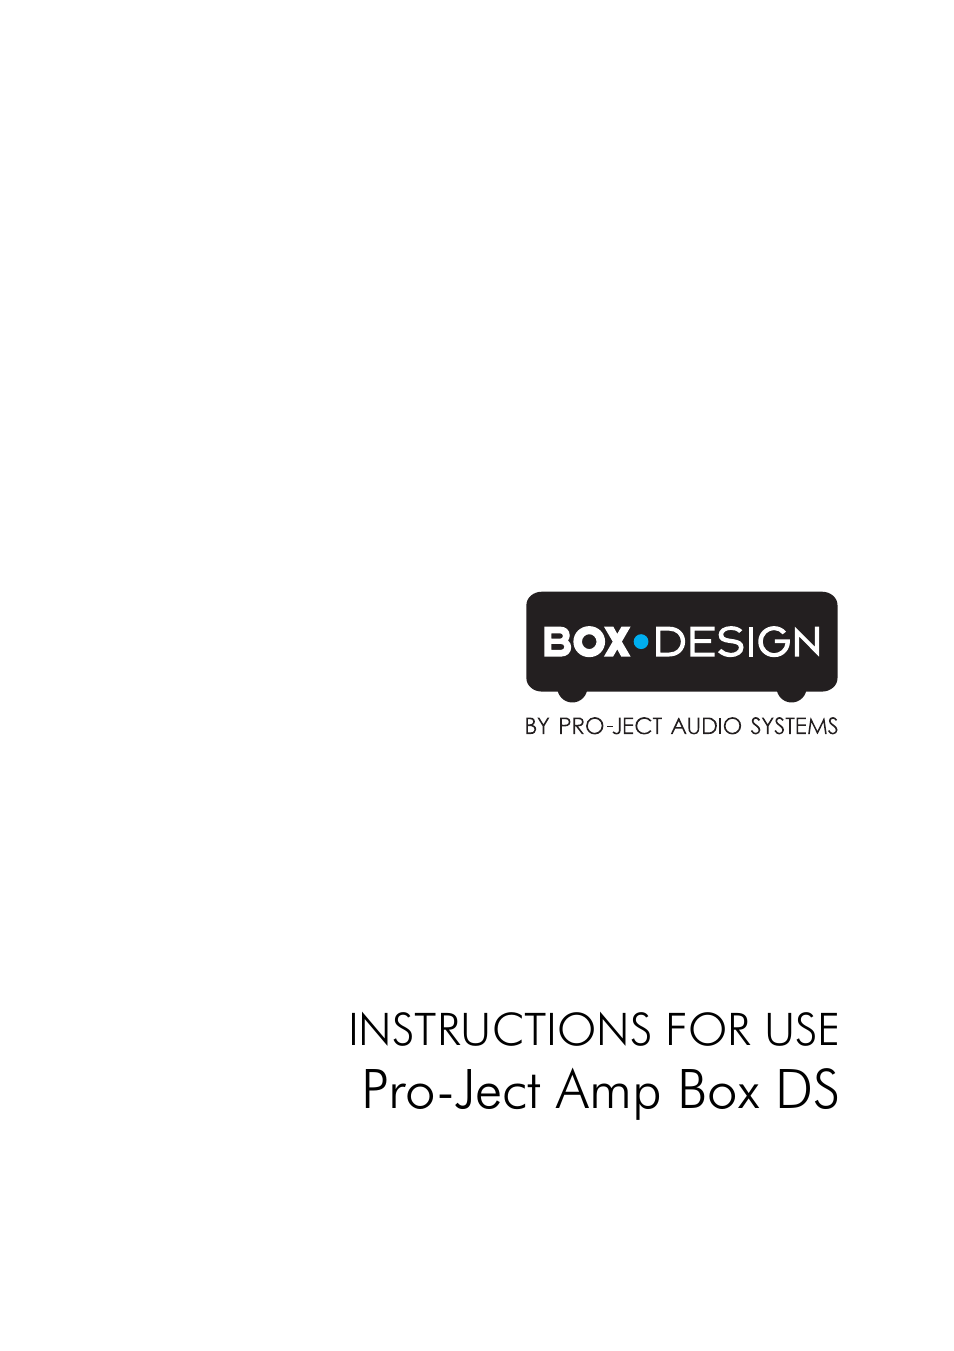 Amp Box DS